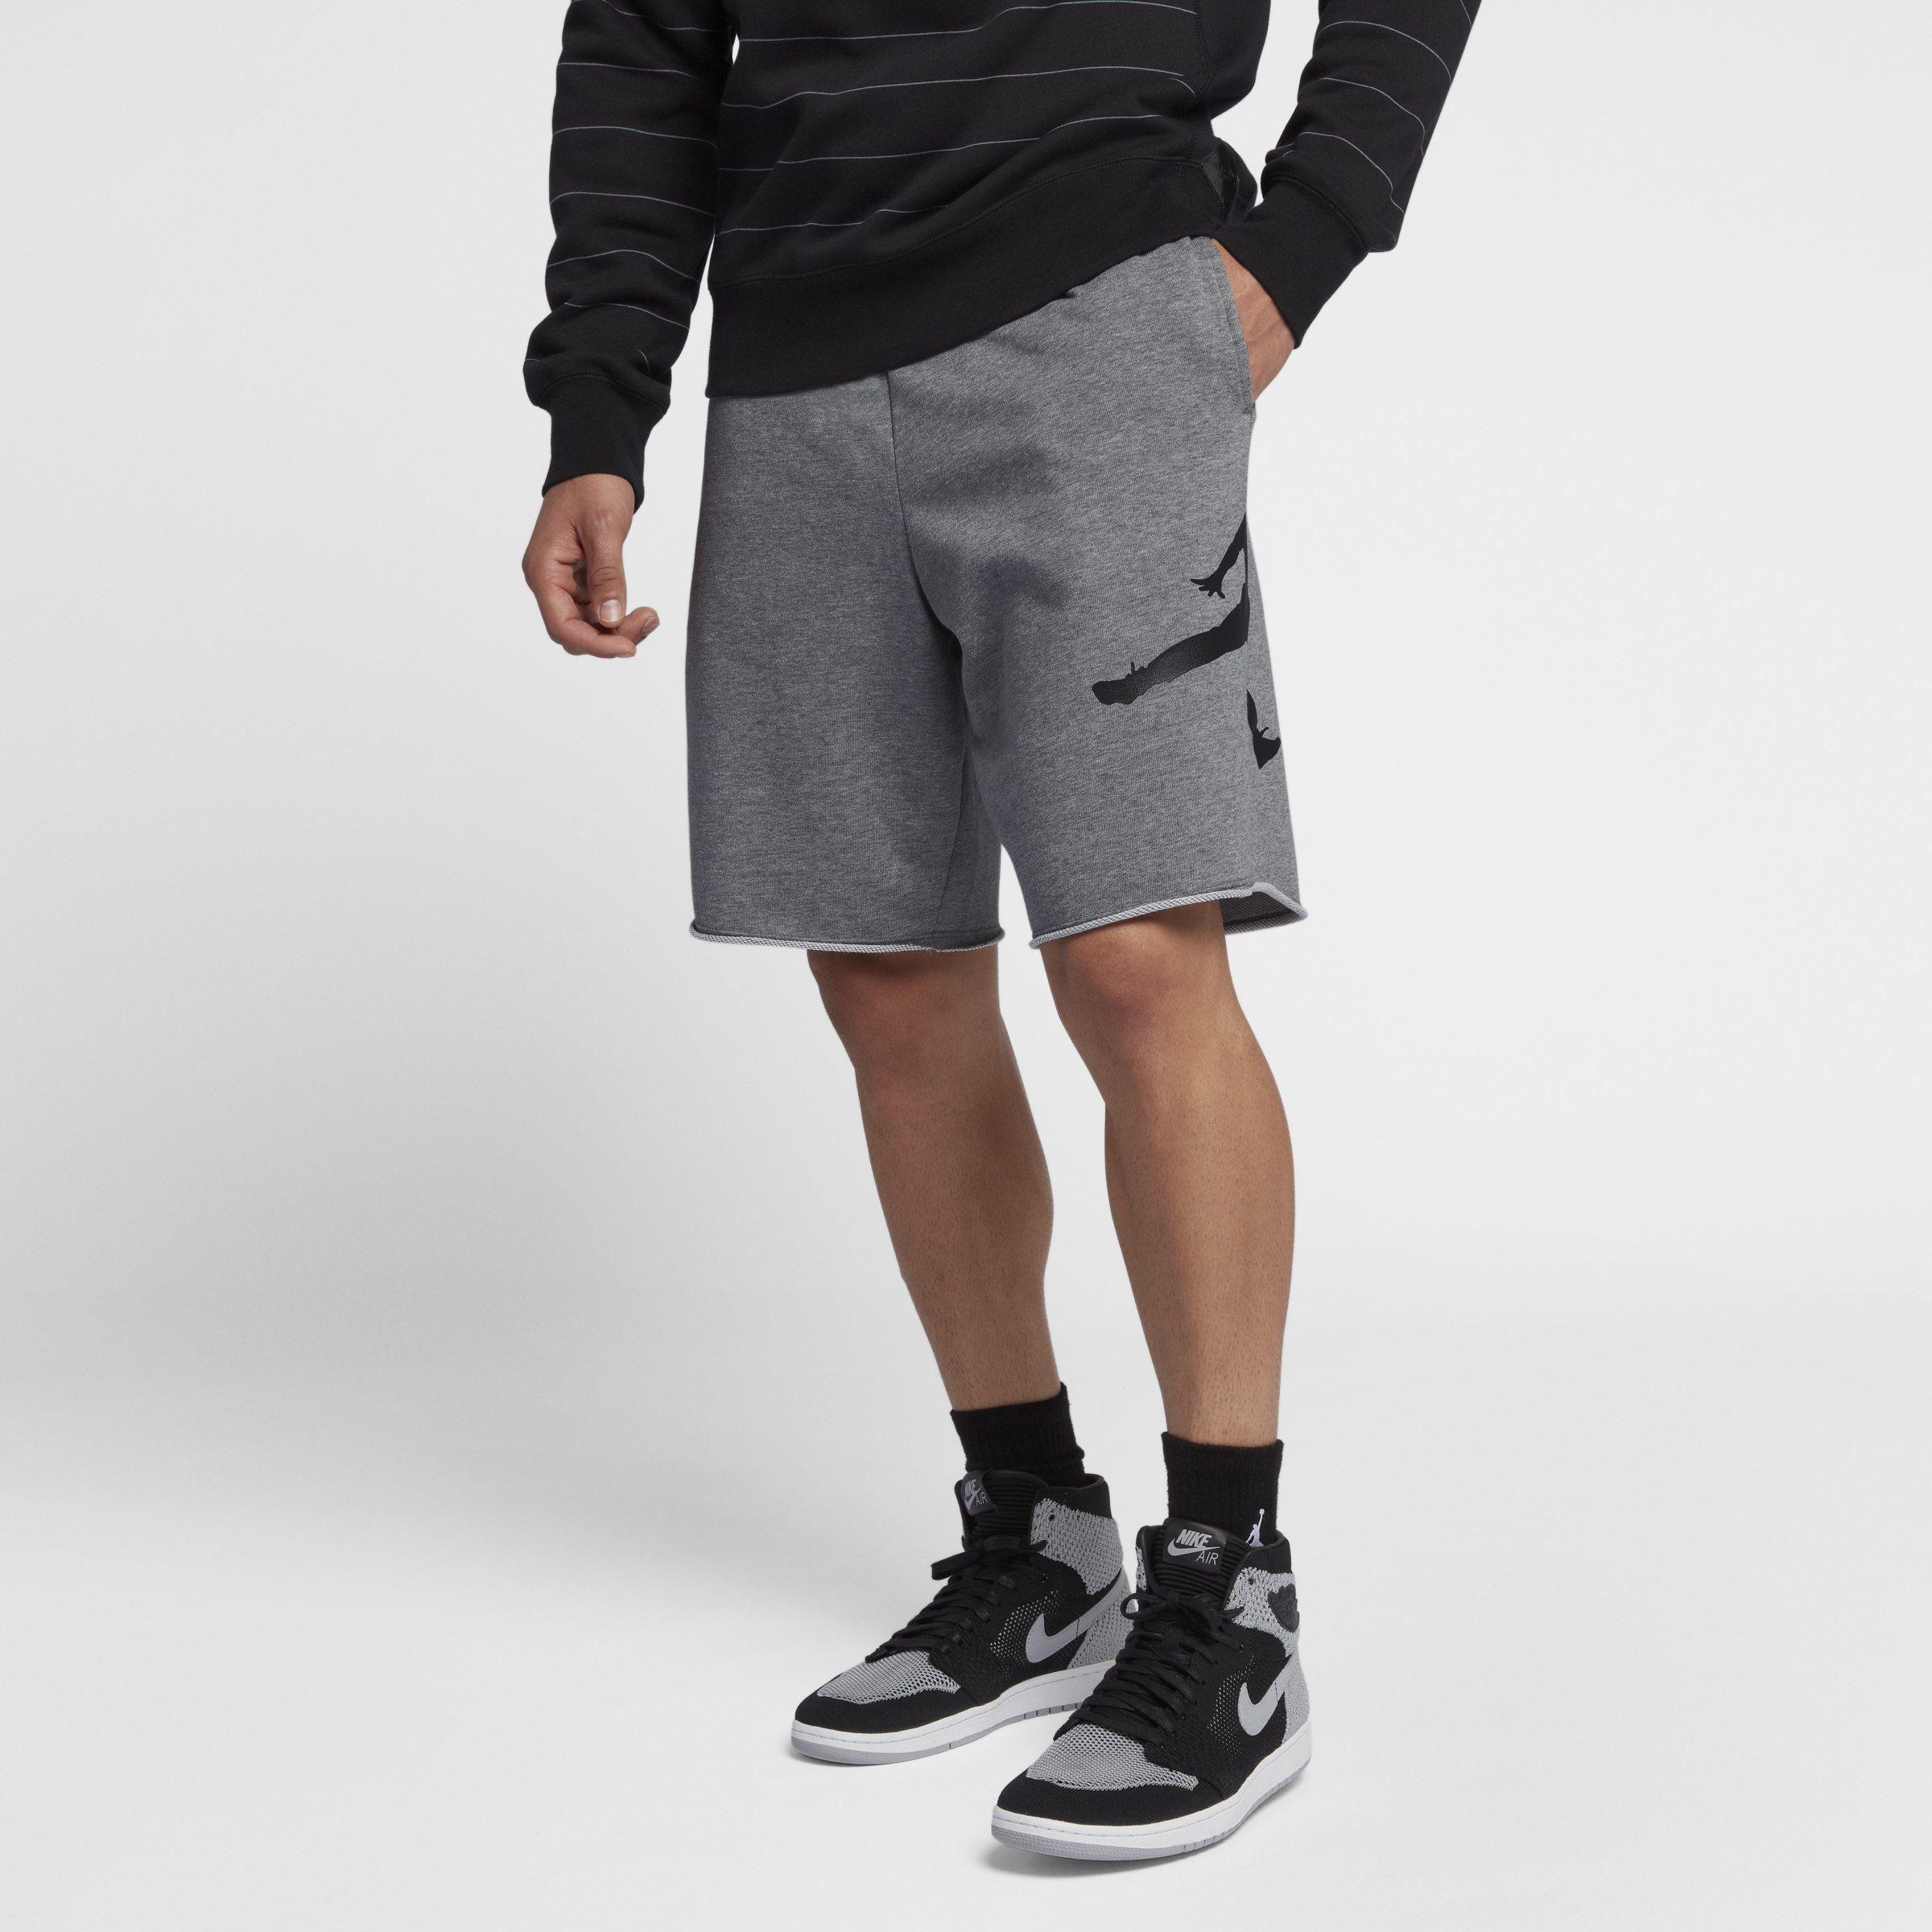 Camo Jordan Jumpman Logo - Nike Jordan Jumpman Logo Fleece Shorts in Gray for Men - Save ...